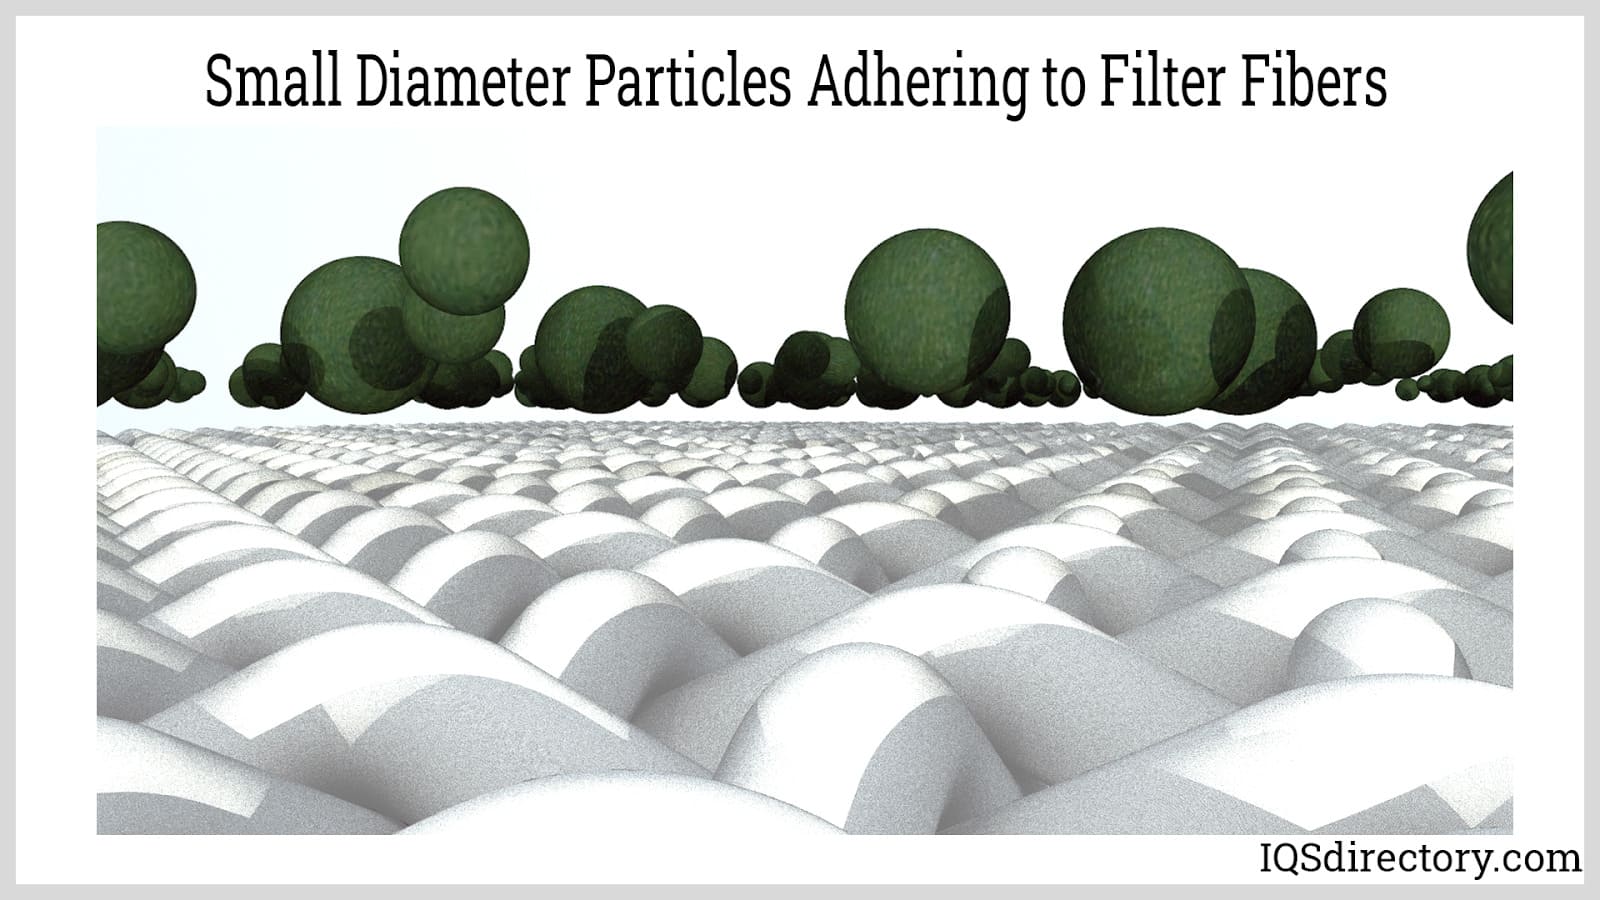 Small Diameter Particles Adhering to Filter Fibers